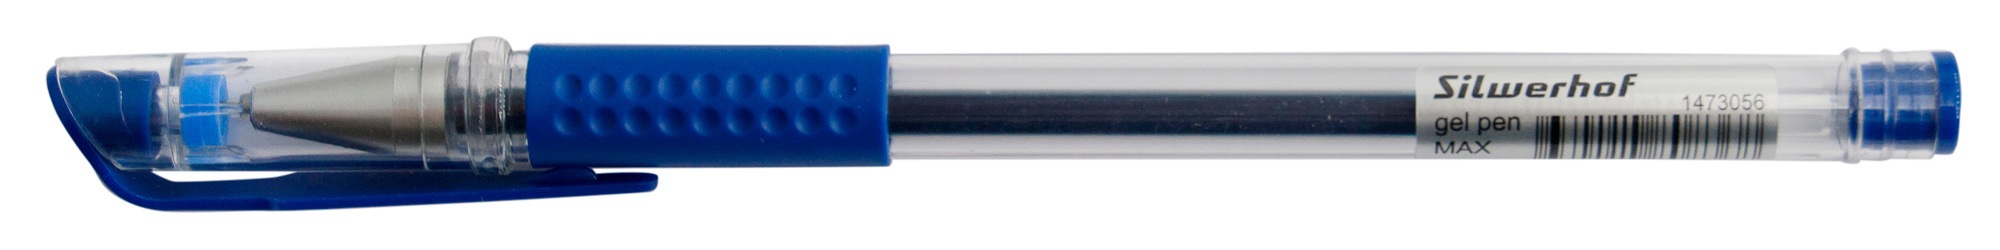 Ручка гелев. Silwerhof Max d=0.5мм син. черн. кор.карт. сменный стержень линия 0.3мм резин. манжета